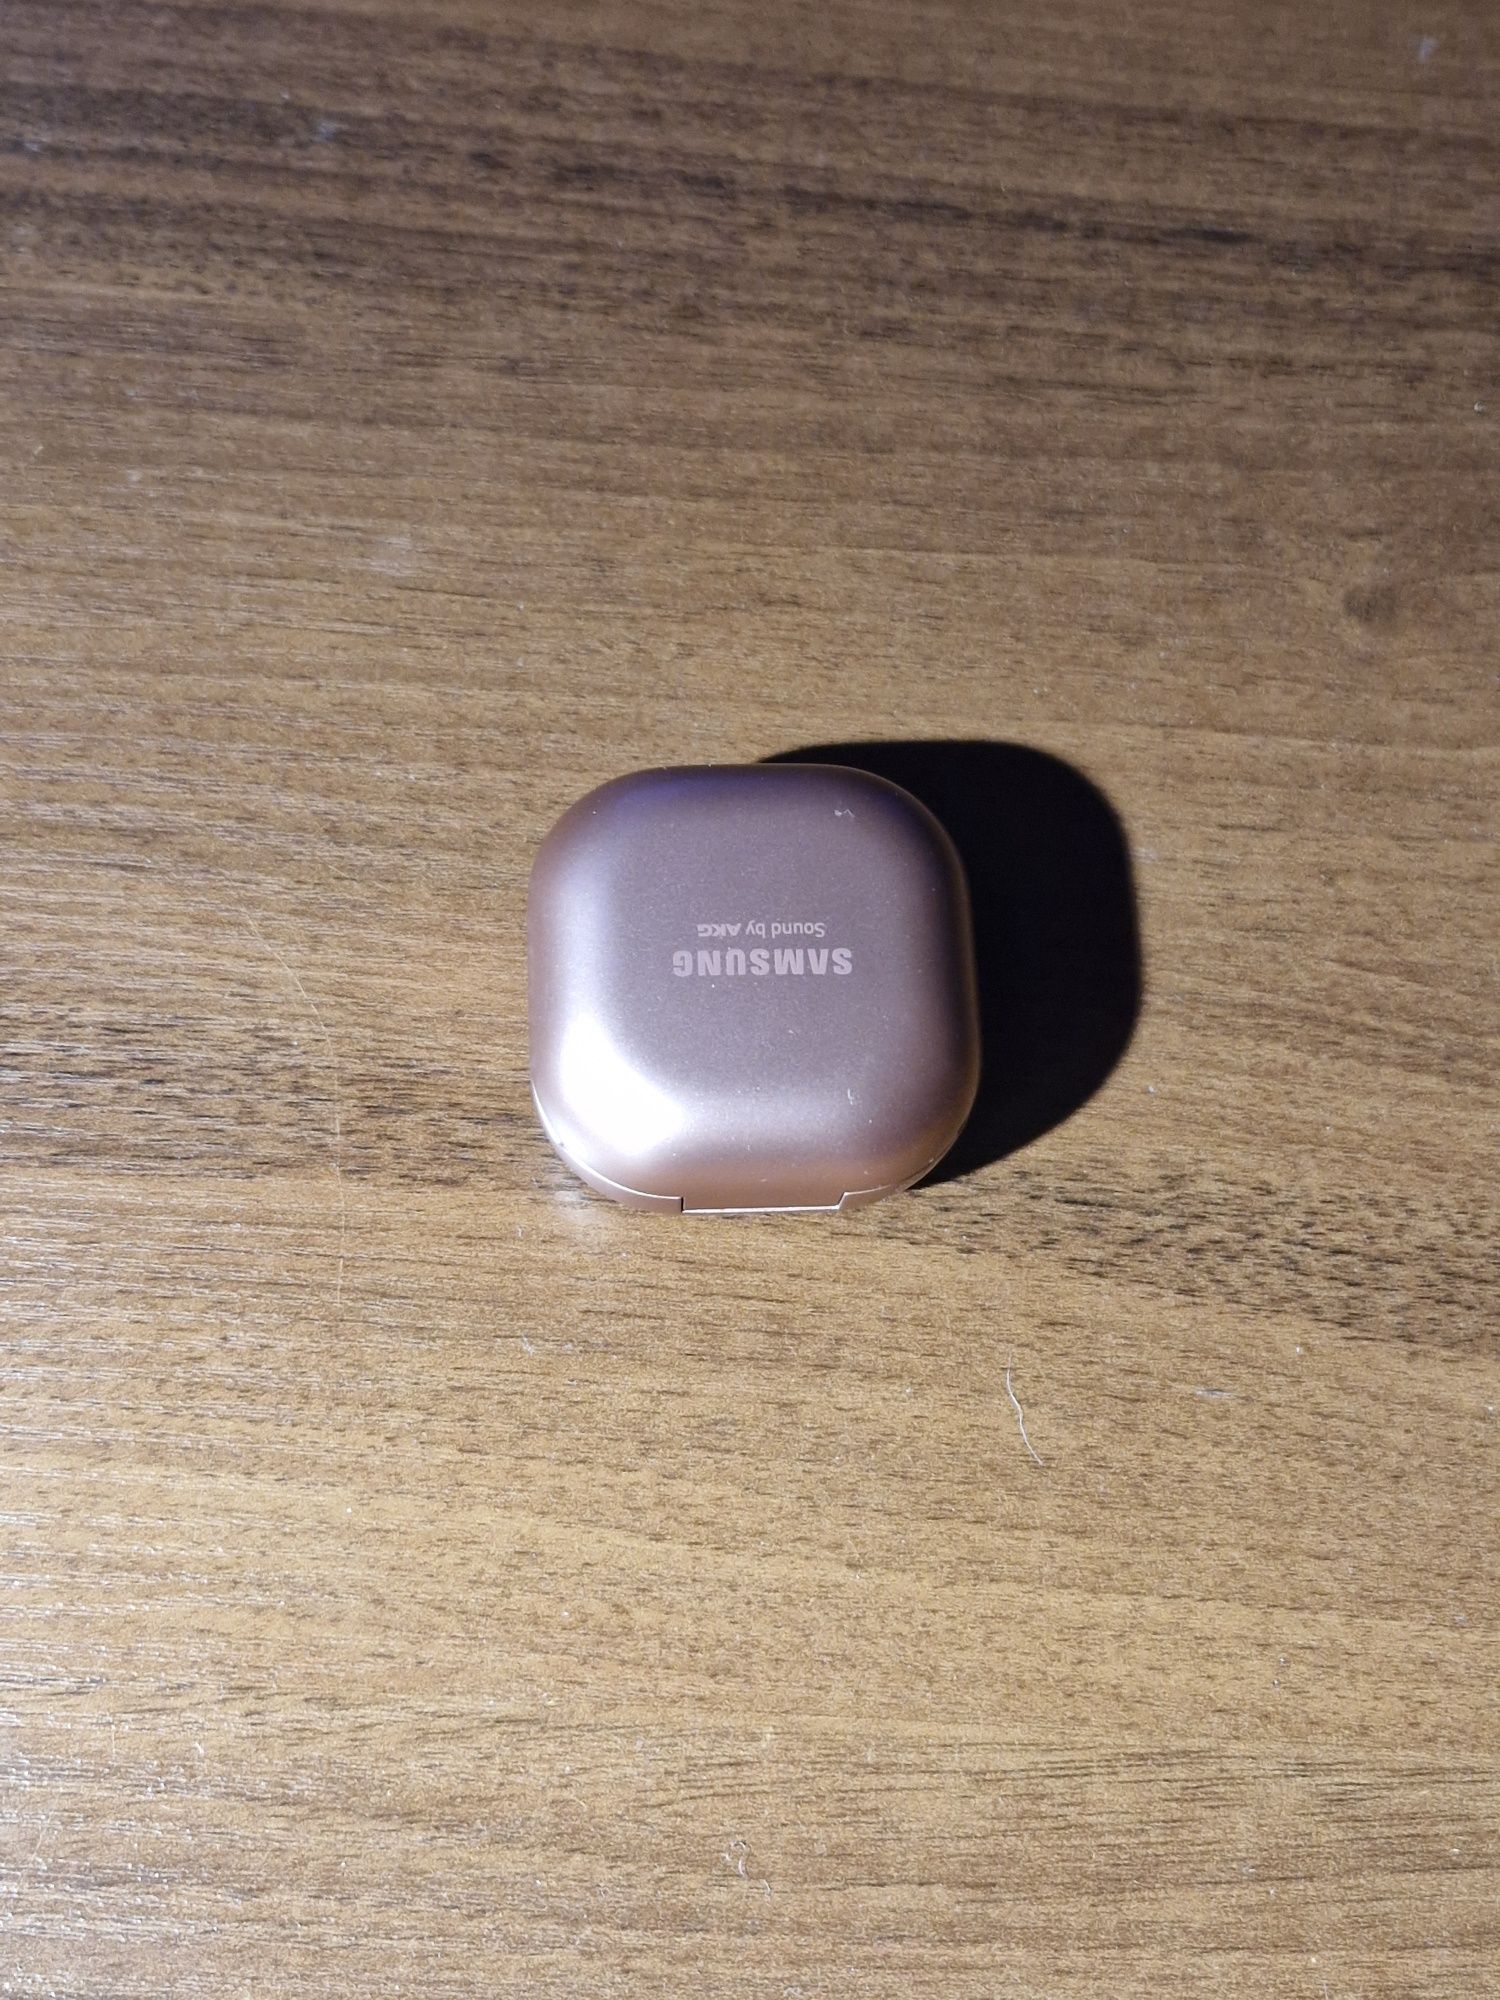 Samsung galaxy bads live